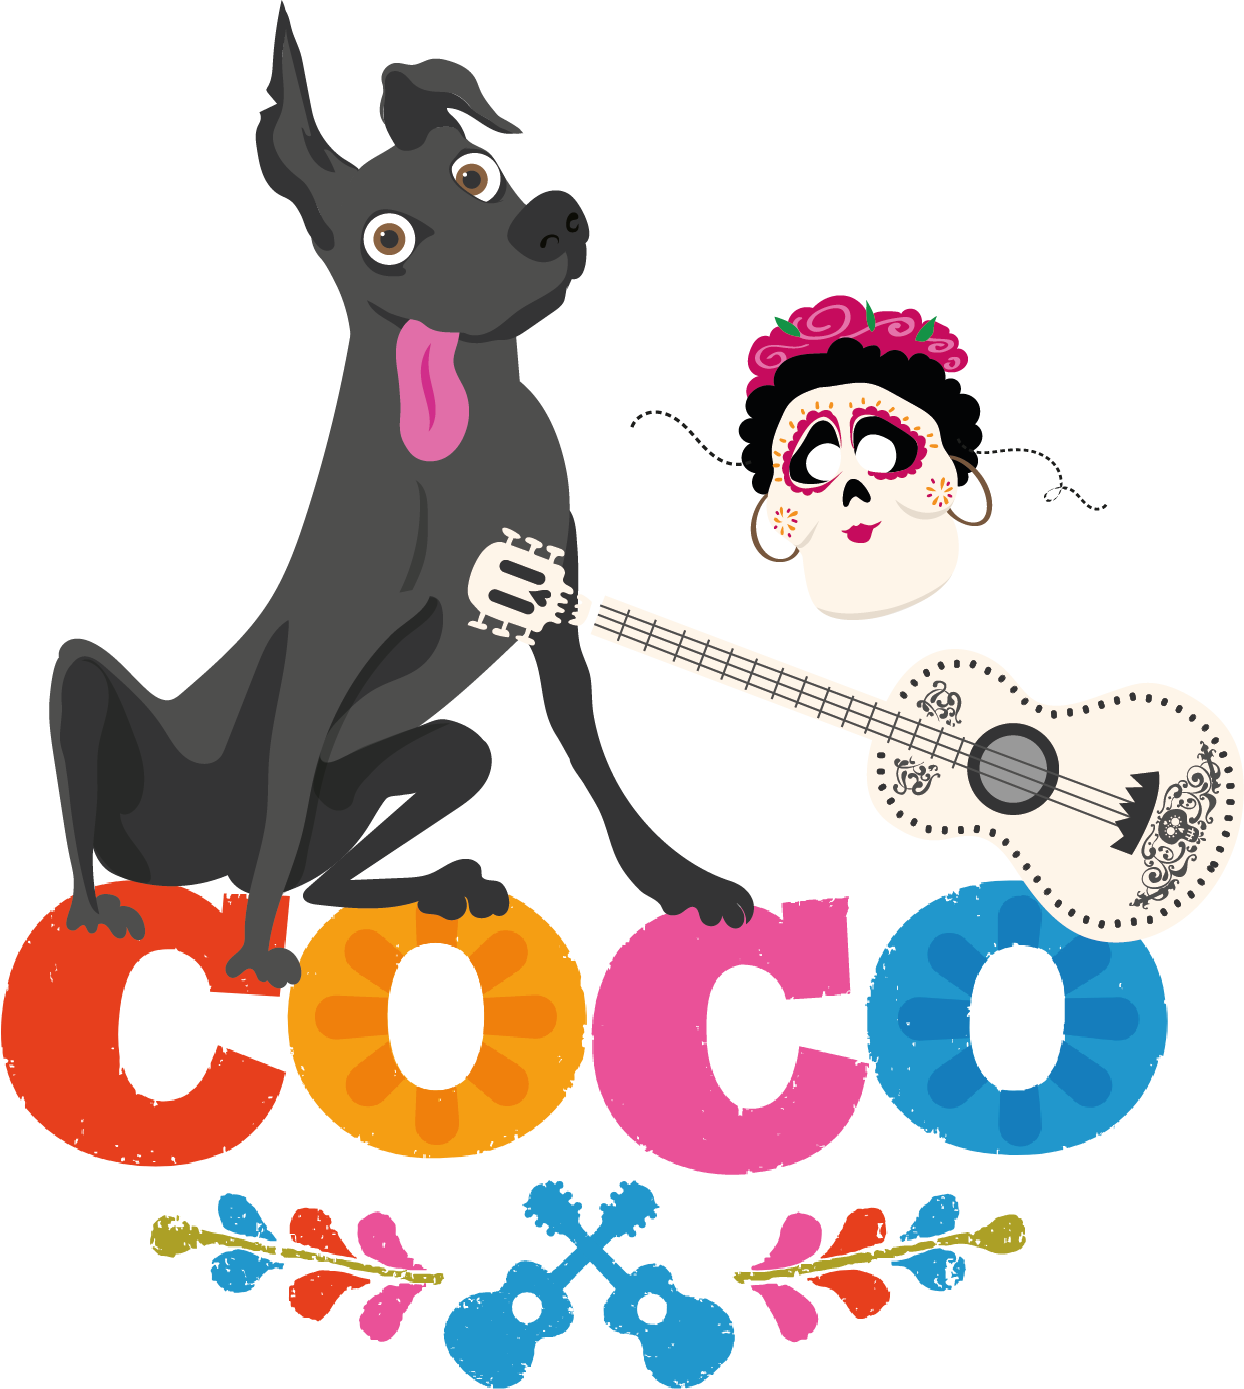 Coco Pixar PNG Transparent